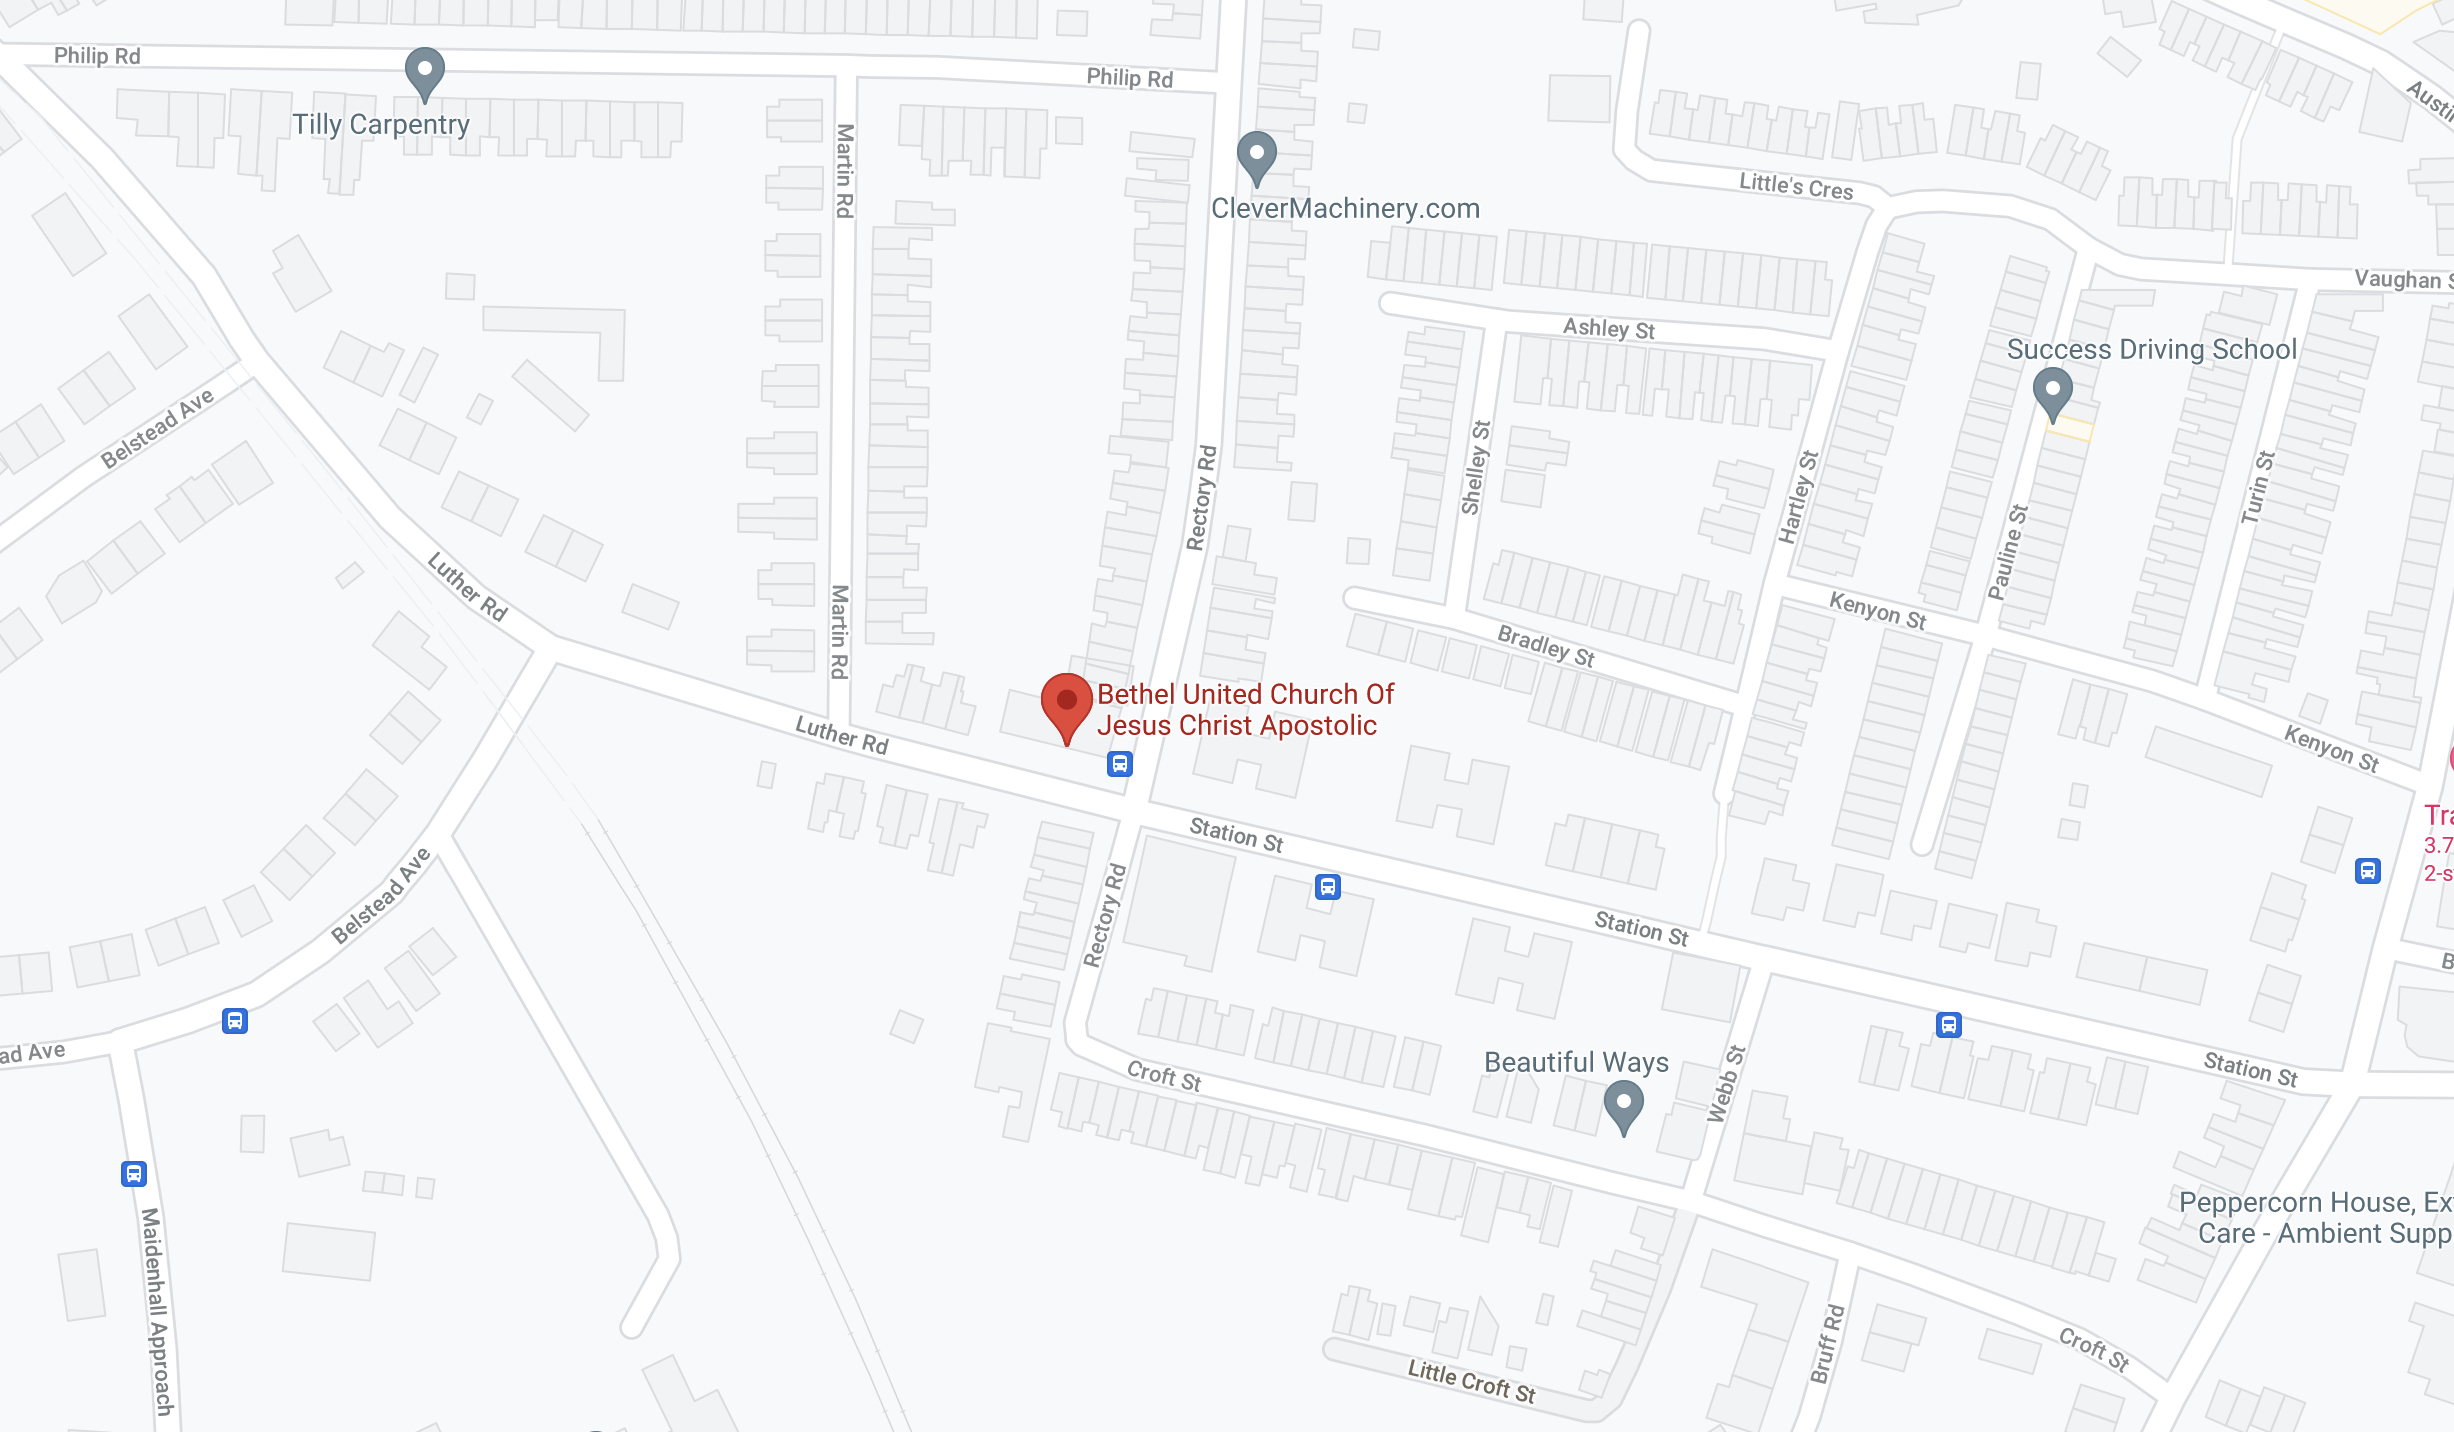 Bethel United Church Of Jesus Christ Apostolic - Google Maps 2021-08-10 12-40-24